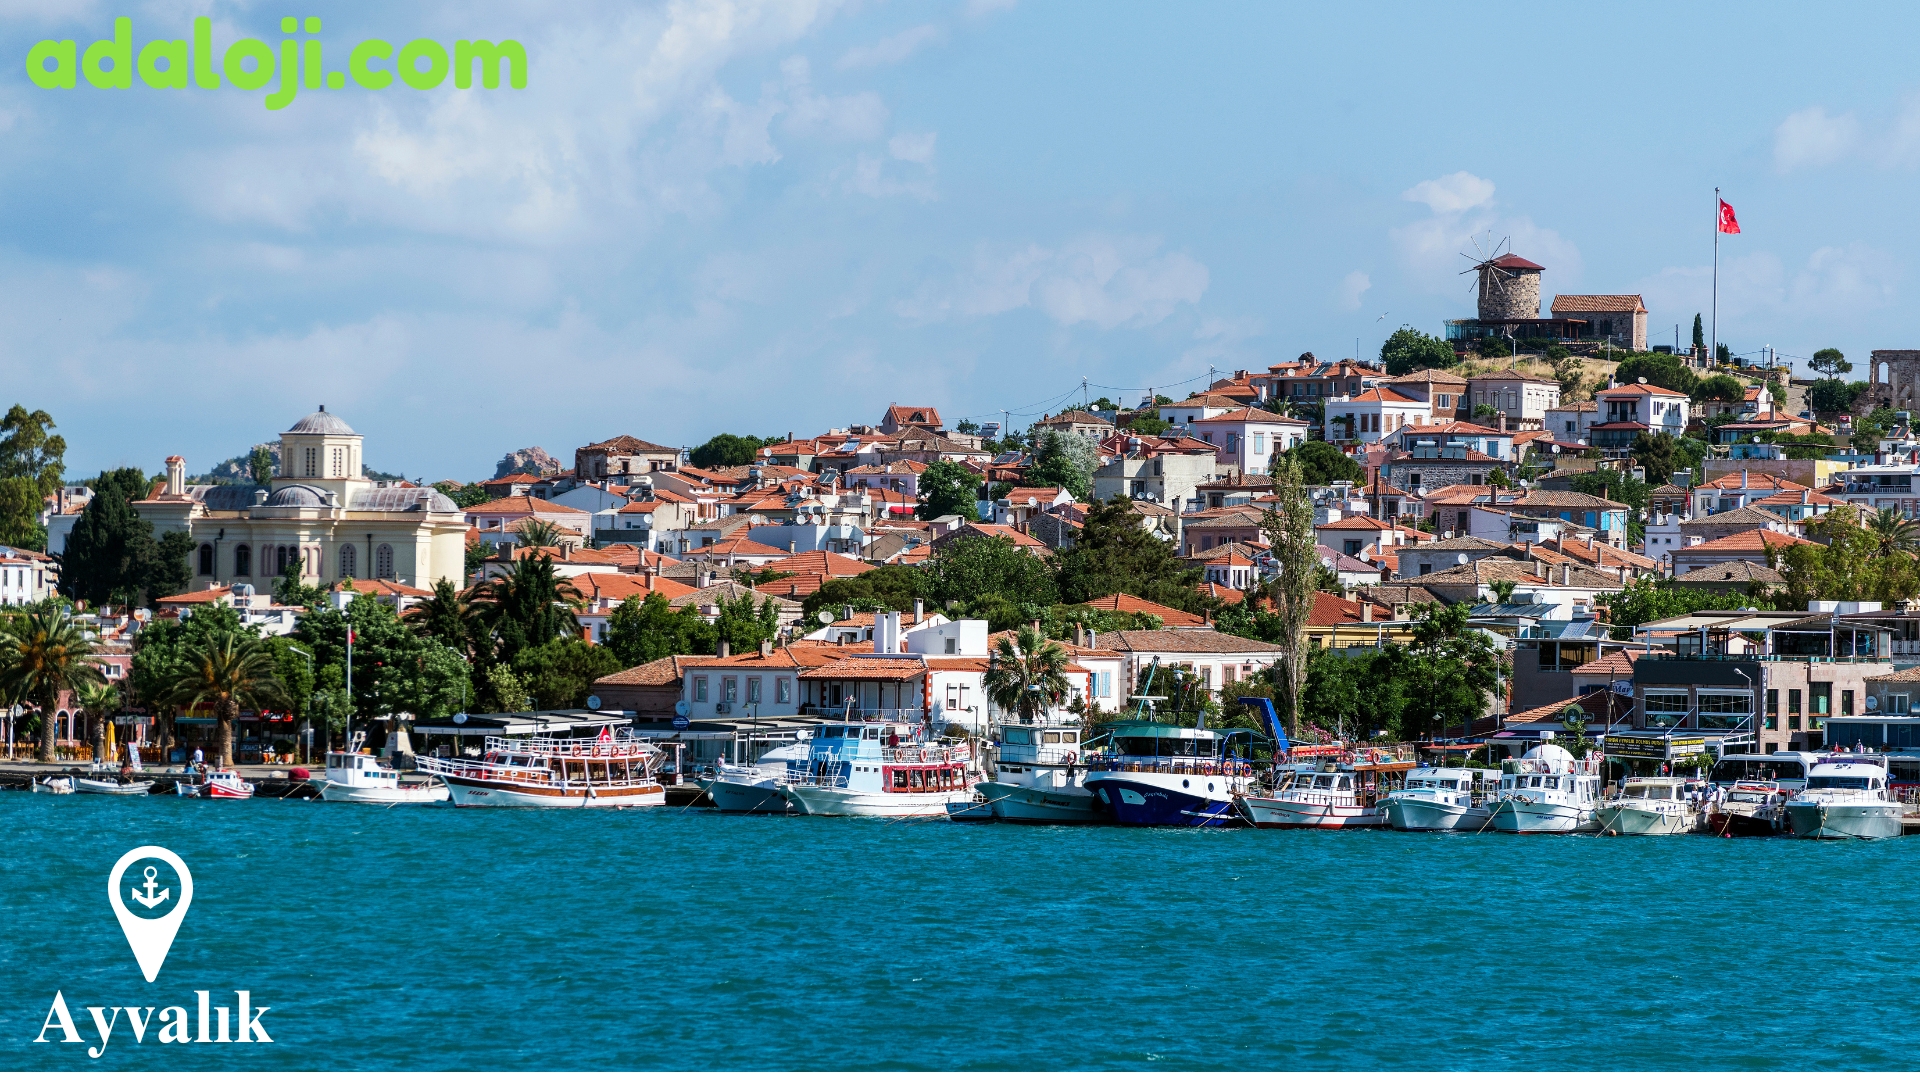 Ayvalik - Your Gateway to the Aegean Sea.